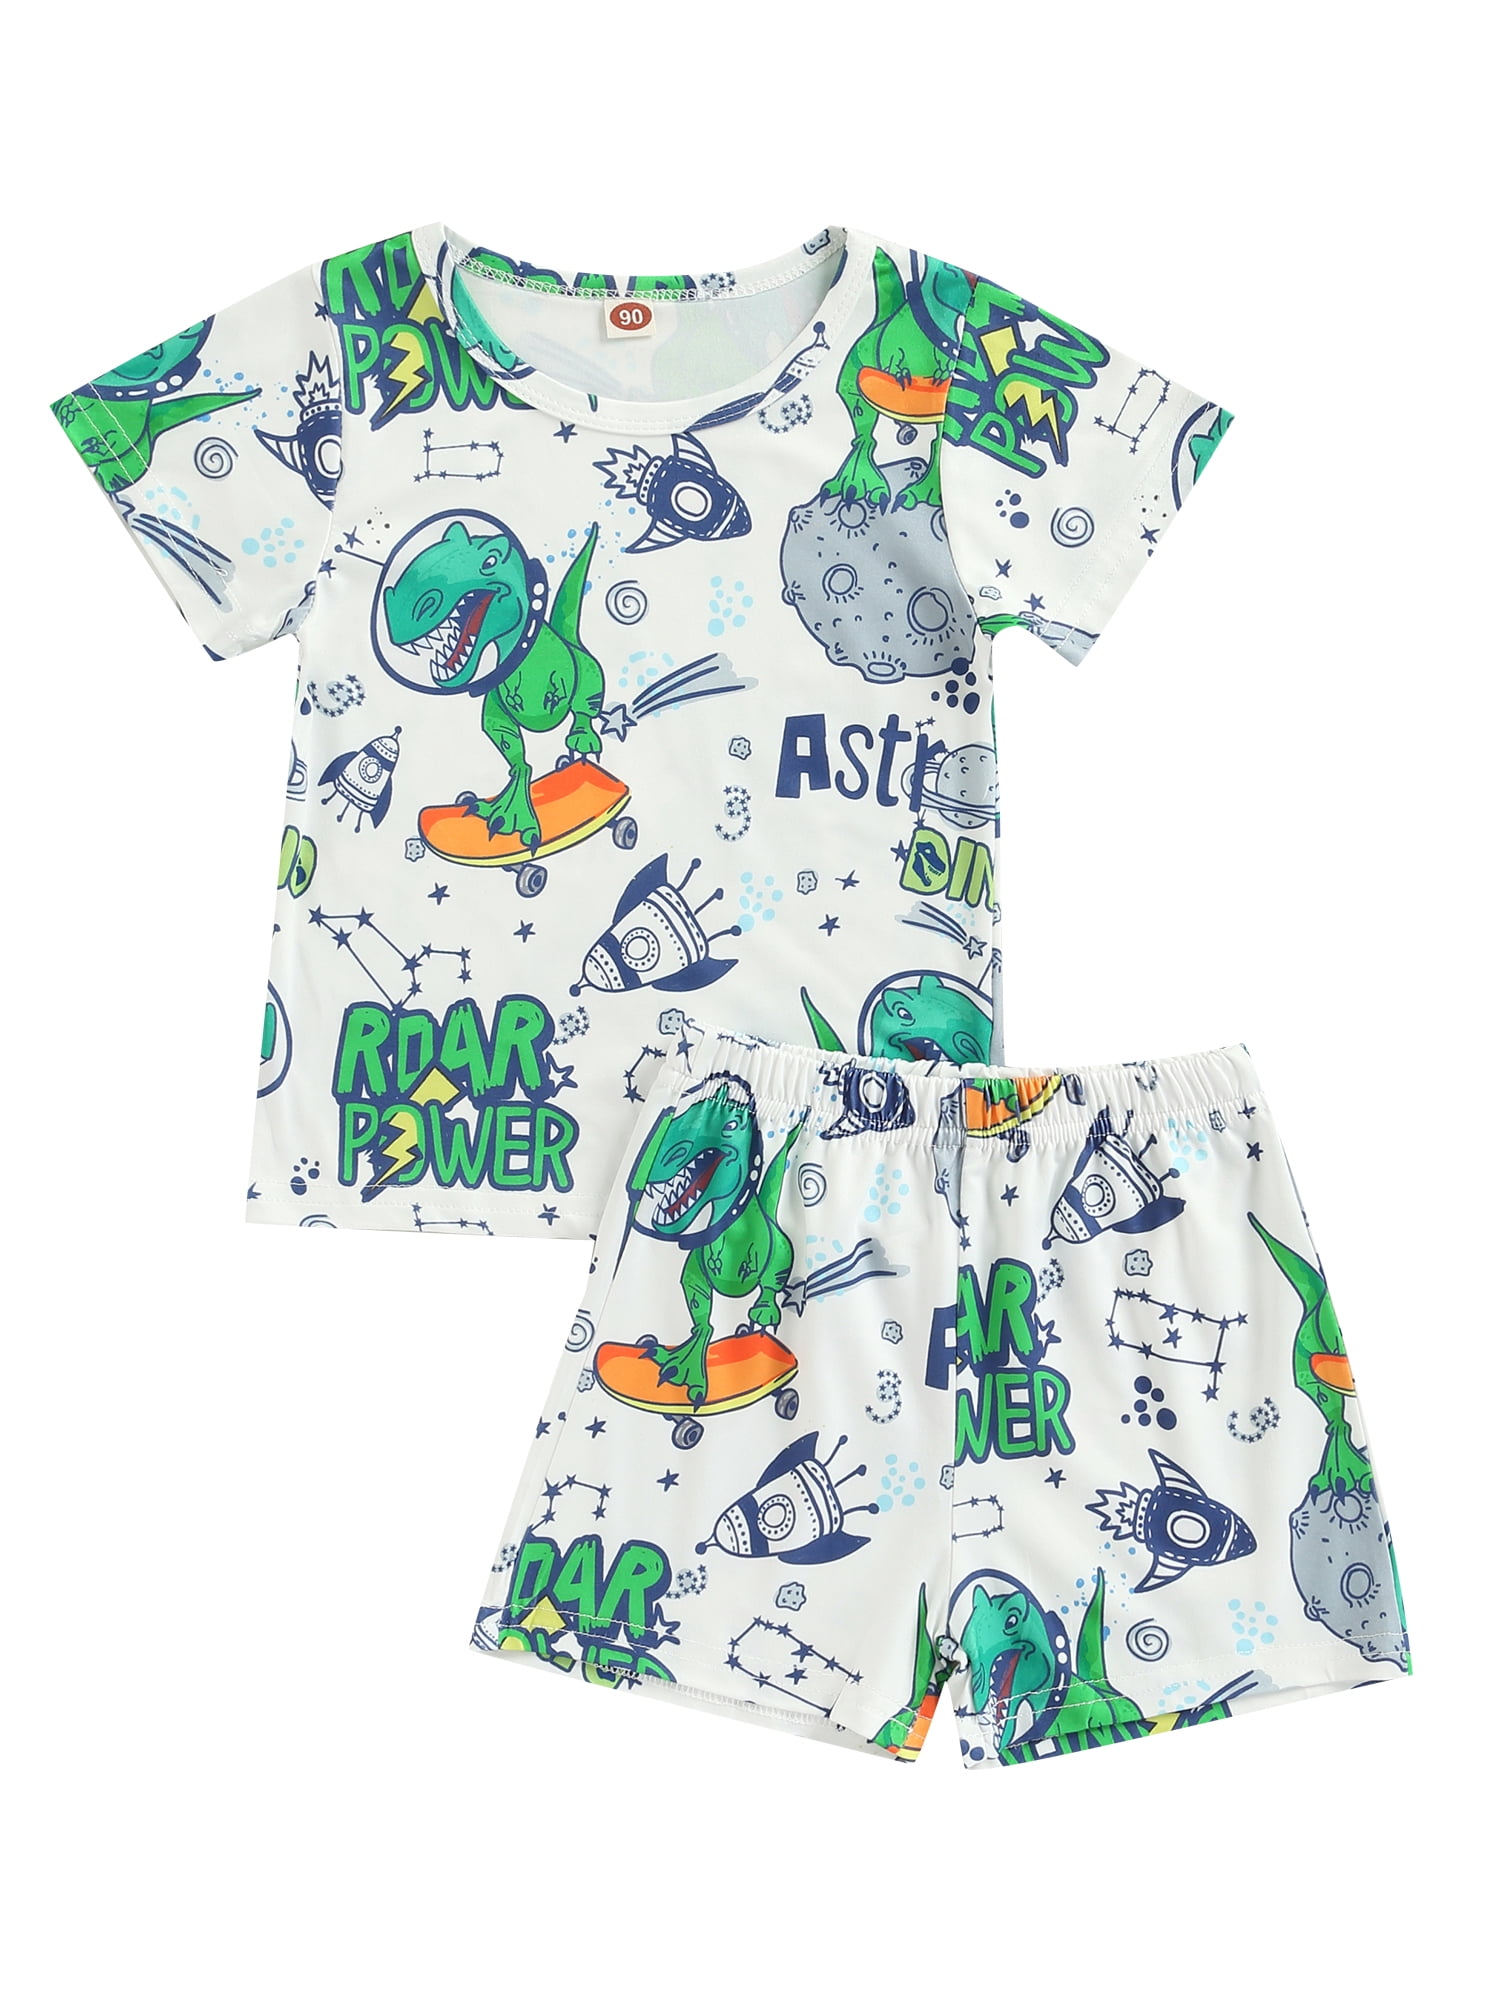 Coralup Kids Boys Short Sleeve Dinosaur T-Shirt Toddler Baby Summer Cotton Tops 18Months-7Years